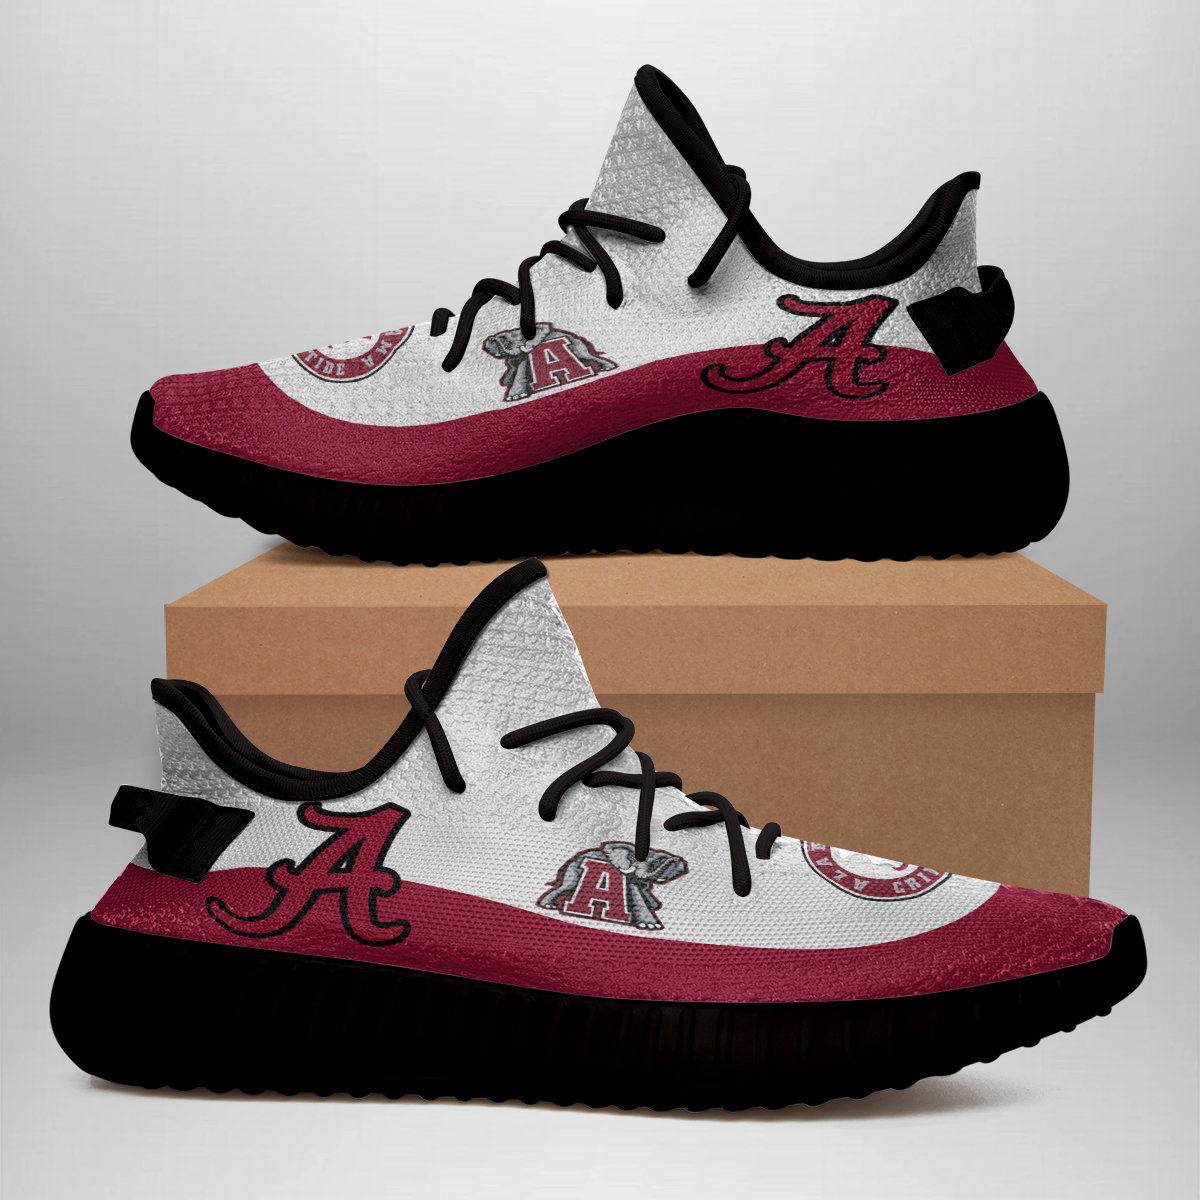 Alabama Crimson Tide Shoes Yeezy Shoes